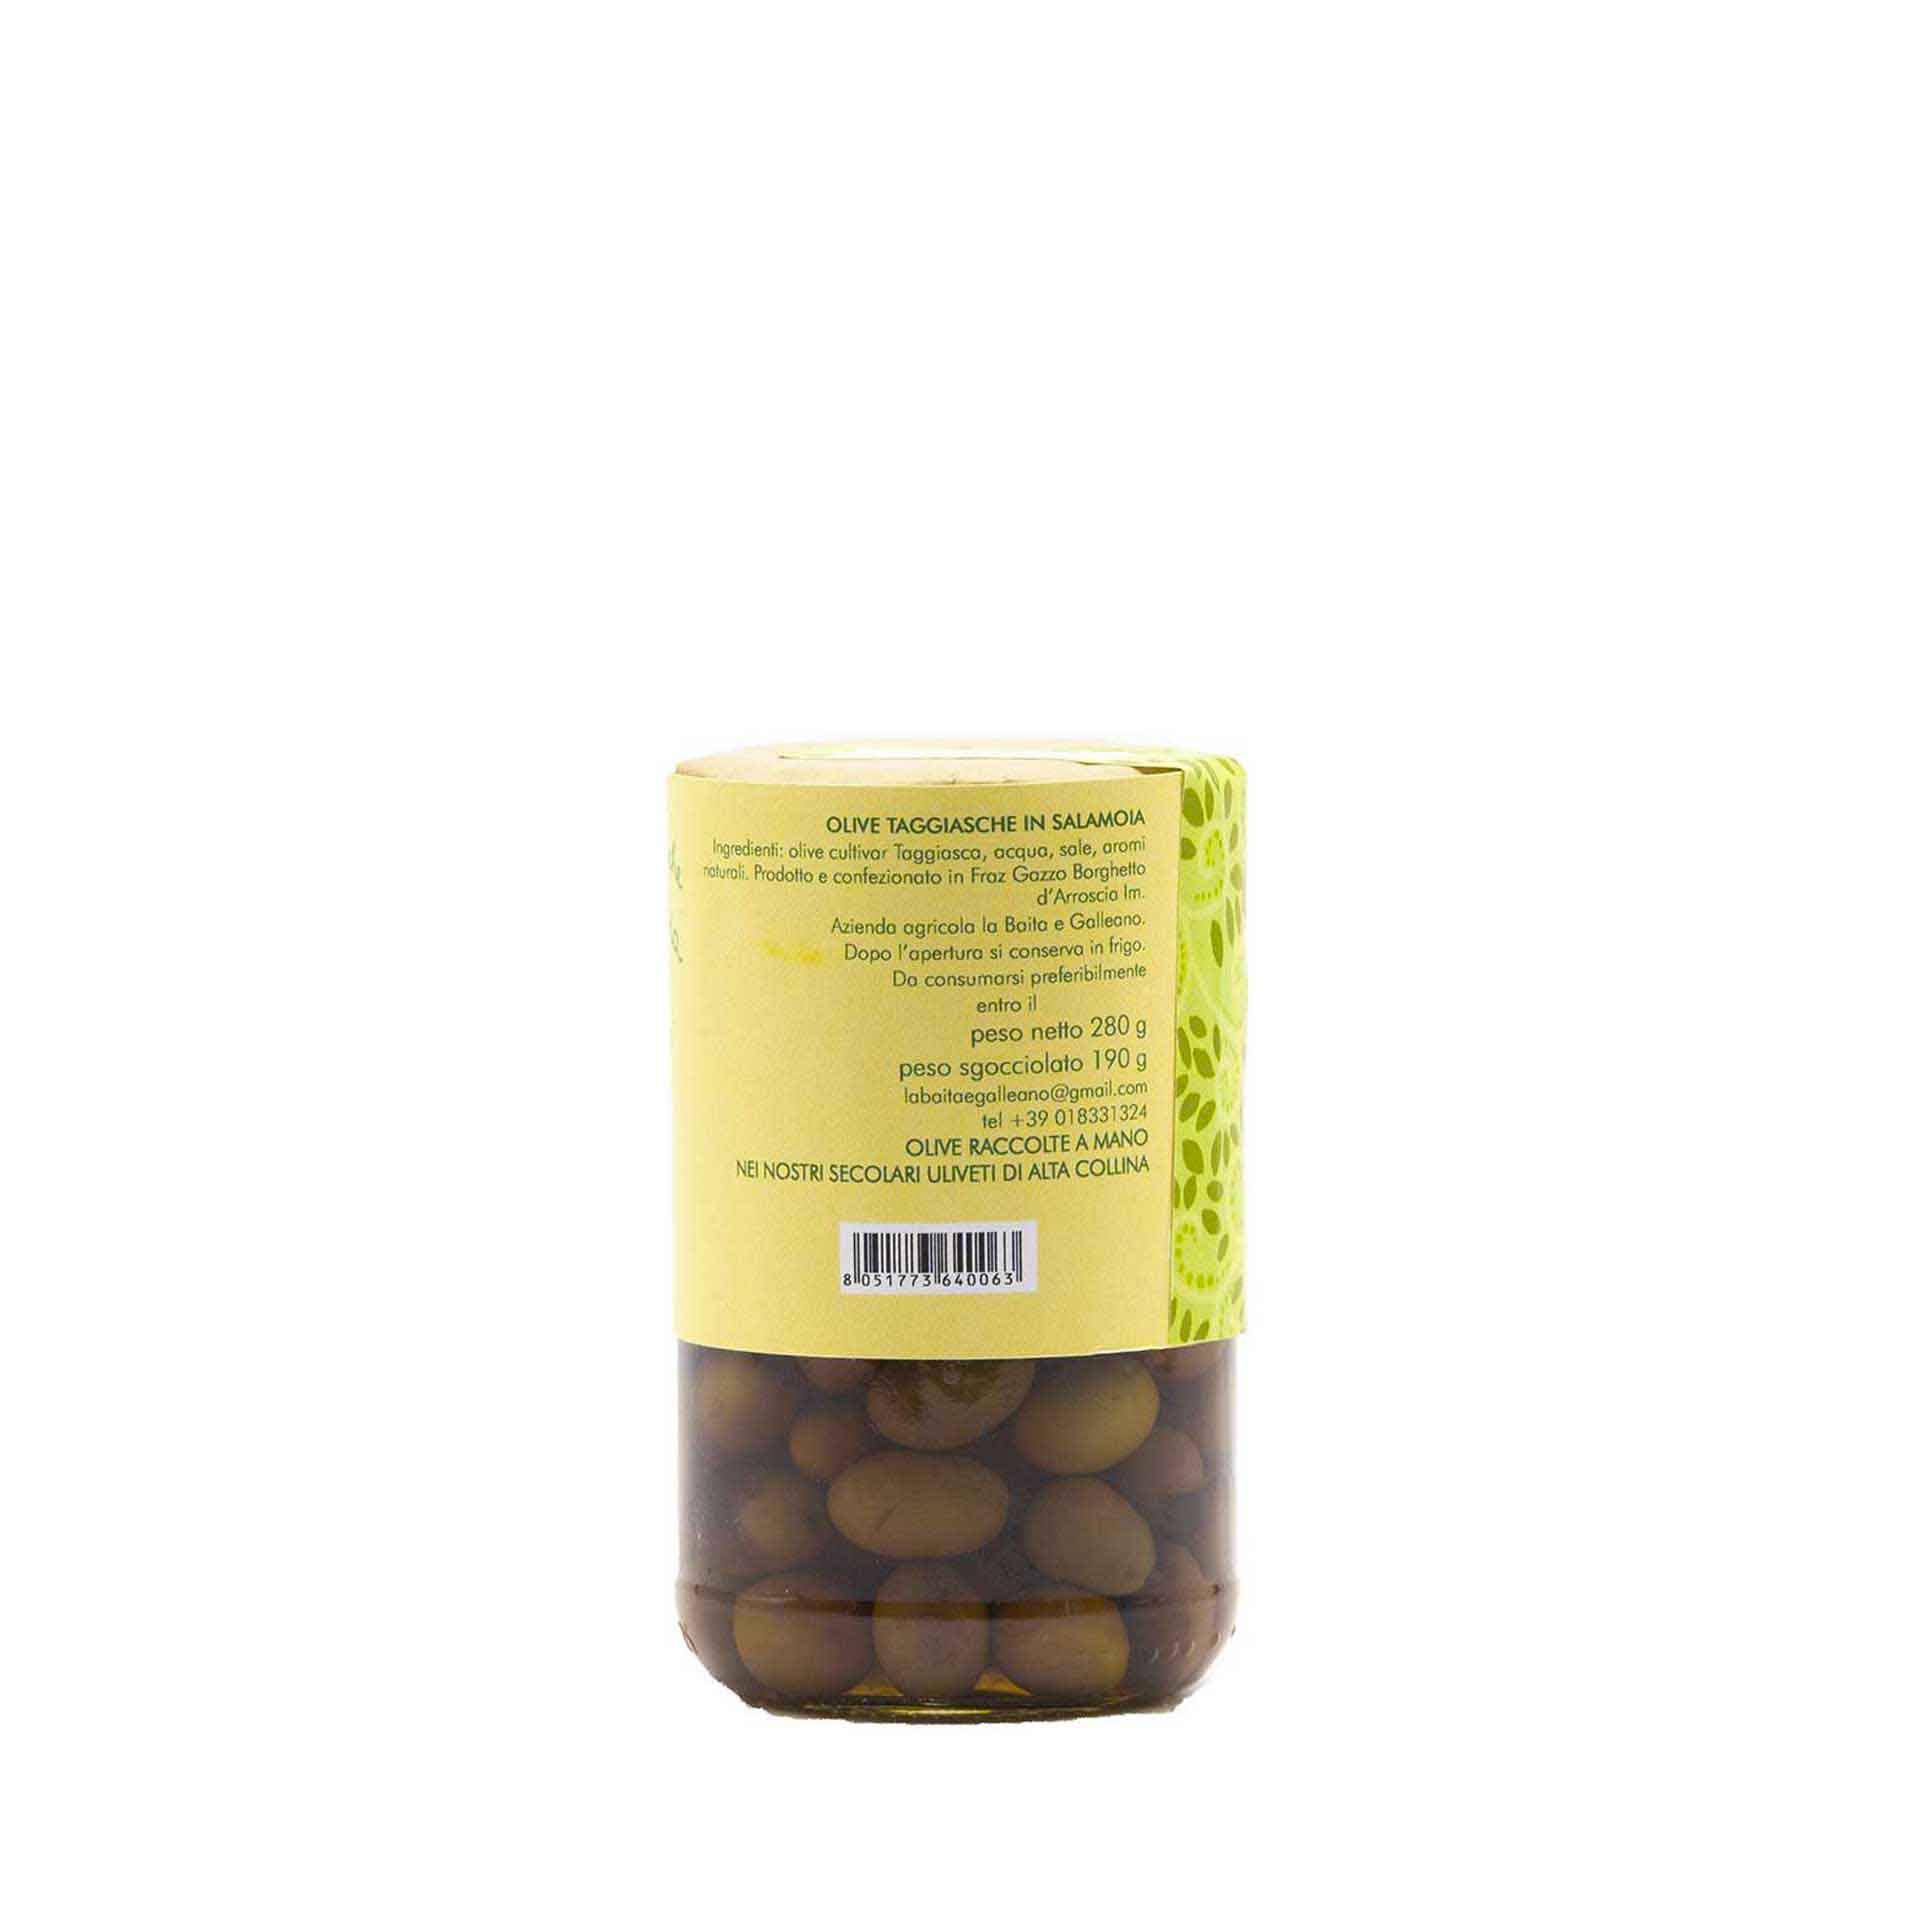 Olive Taggiasche in Salamoia